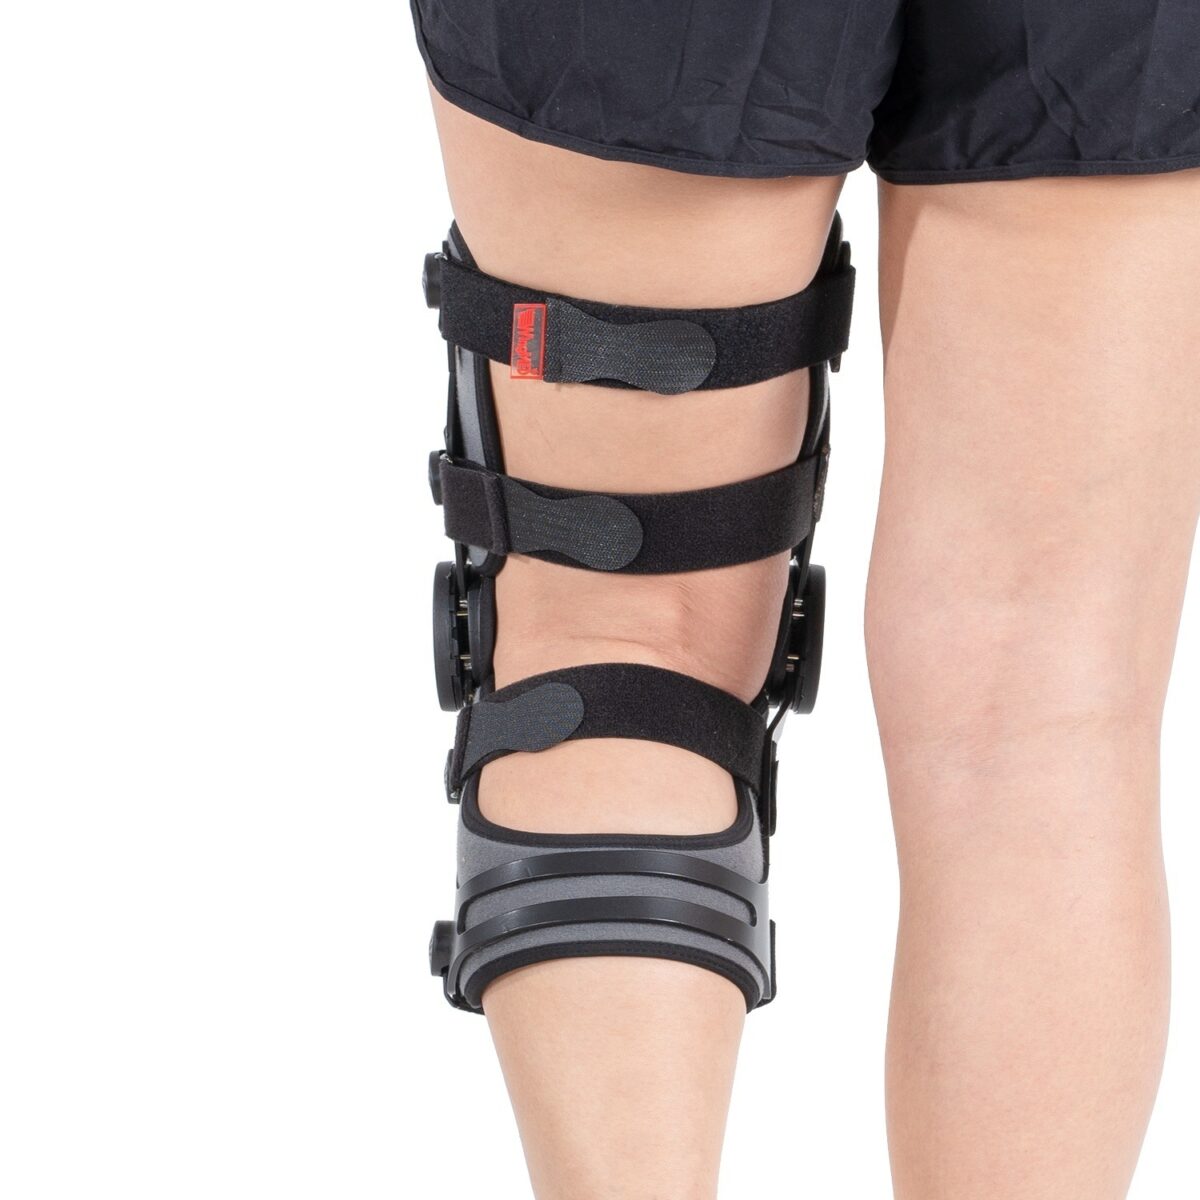 wingmed orthopedic equipments W518 functional knee brace 76